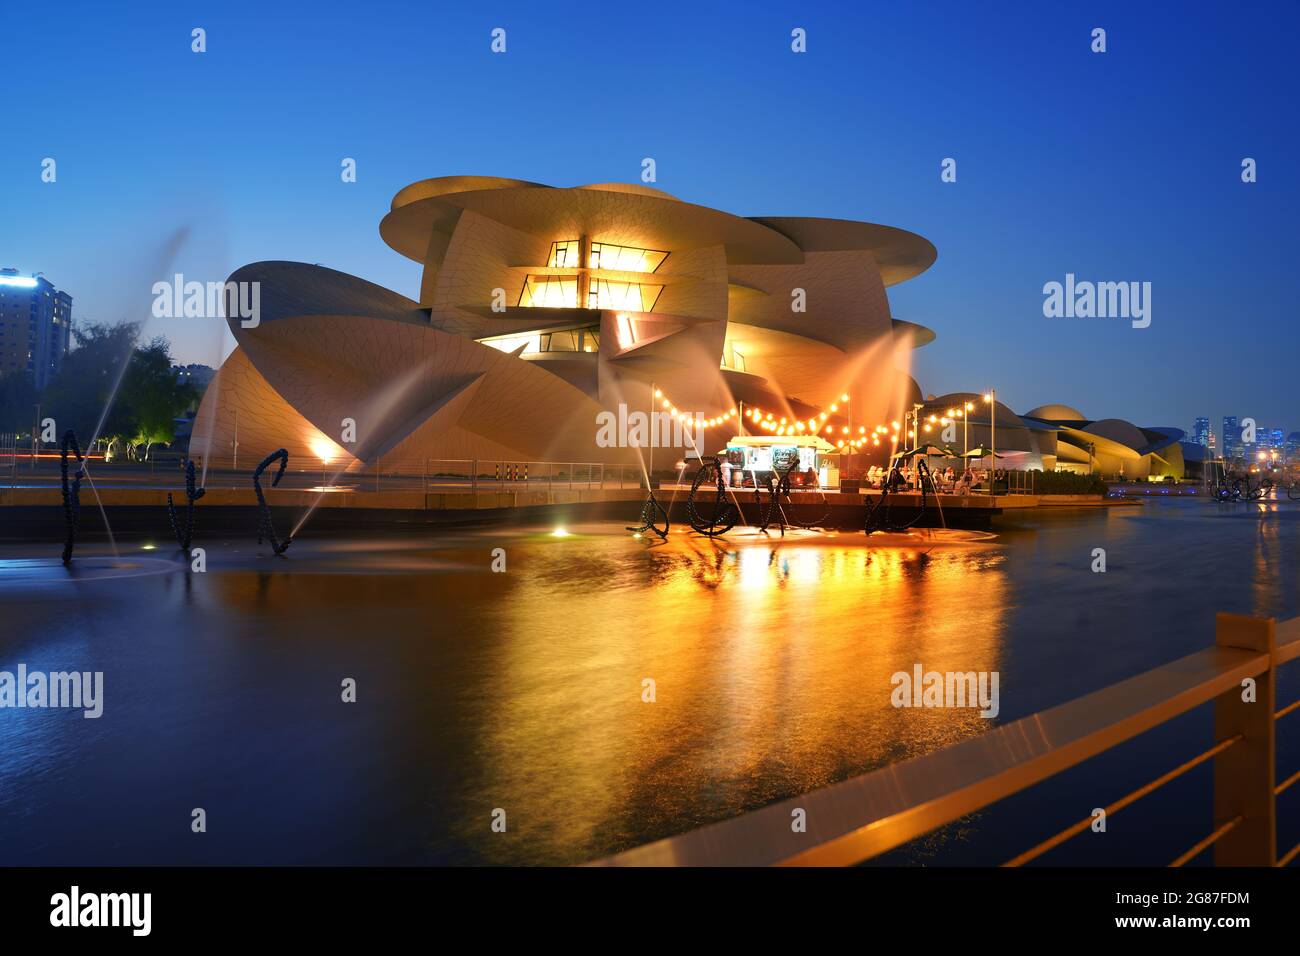 Qatar national museum Stock Photo - Alamy